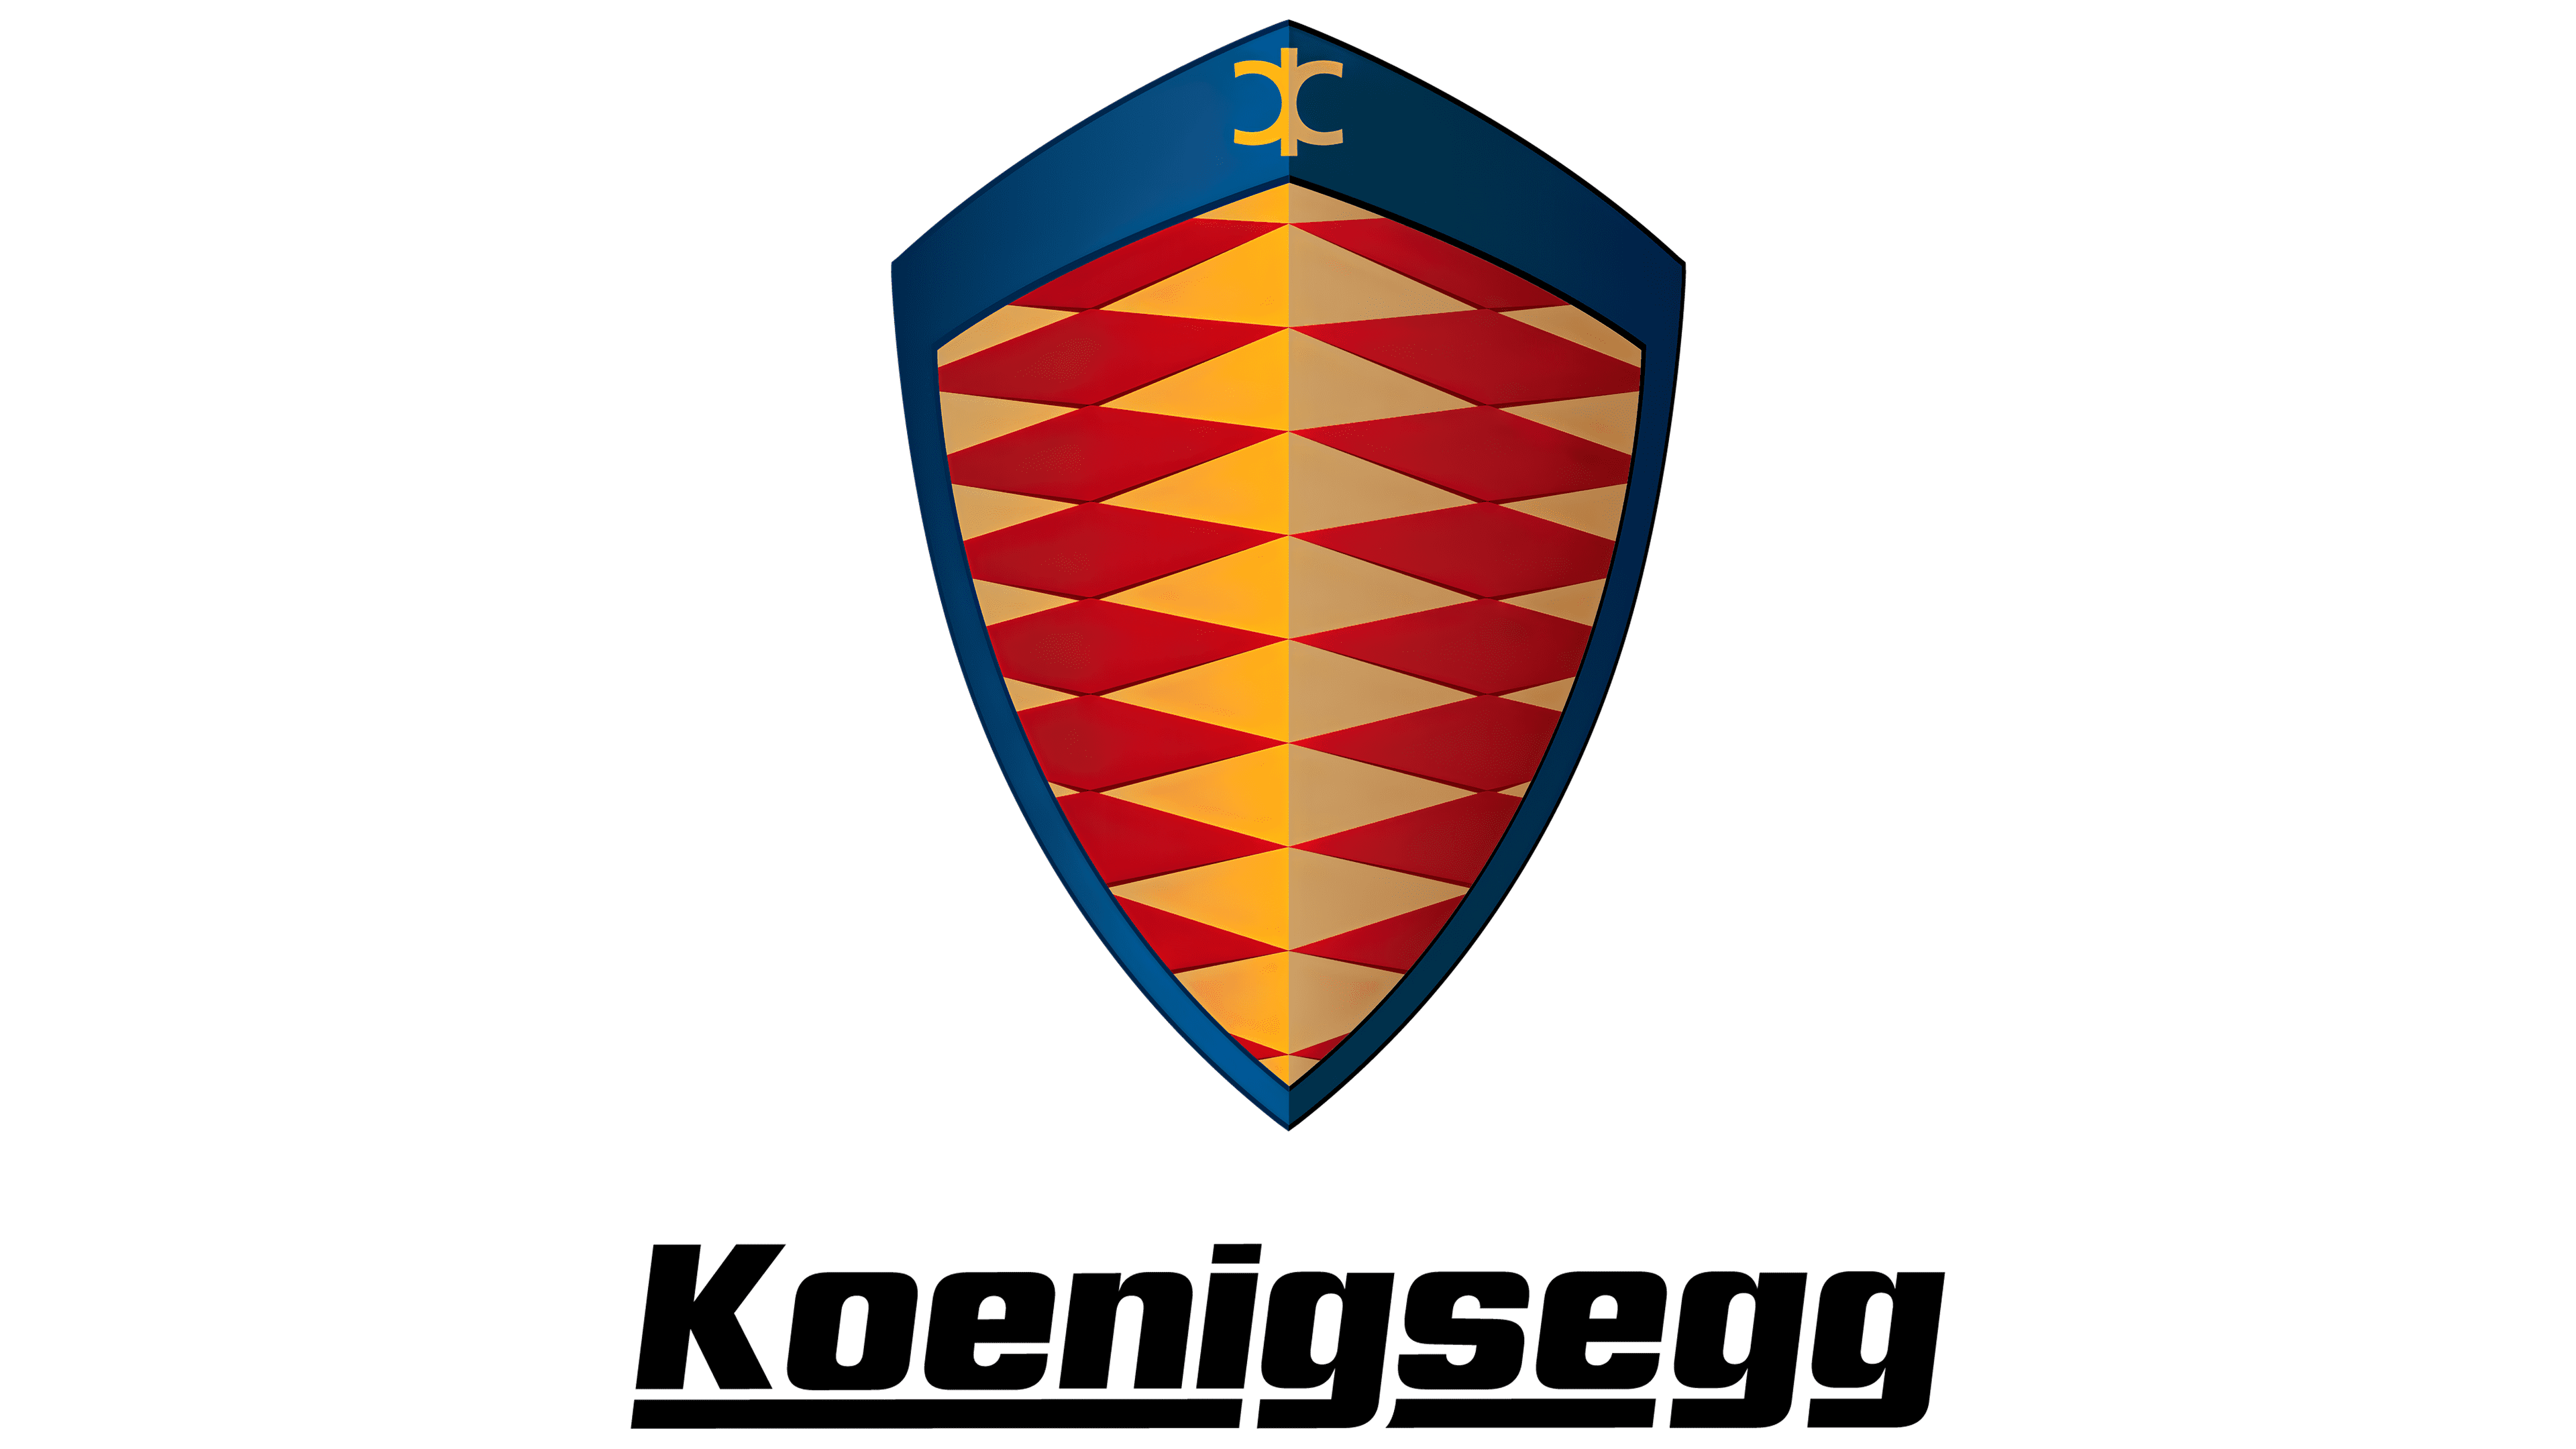 Koenigsegg Logo, symbol, meaning, history, PNG, brand